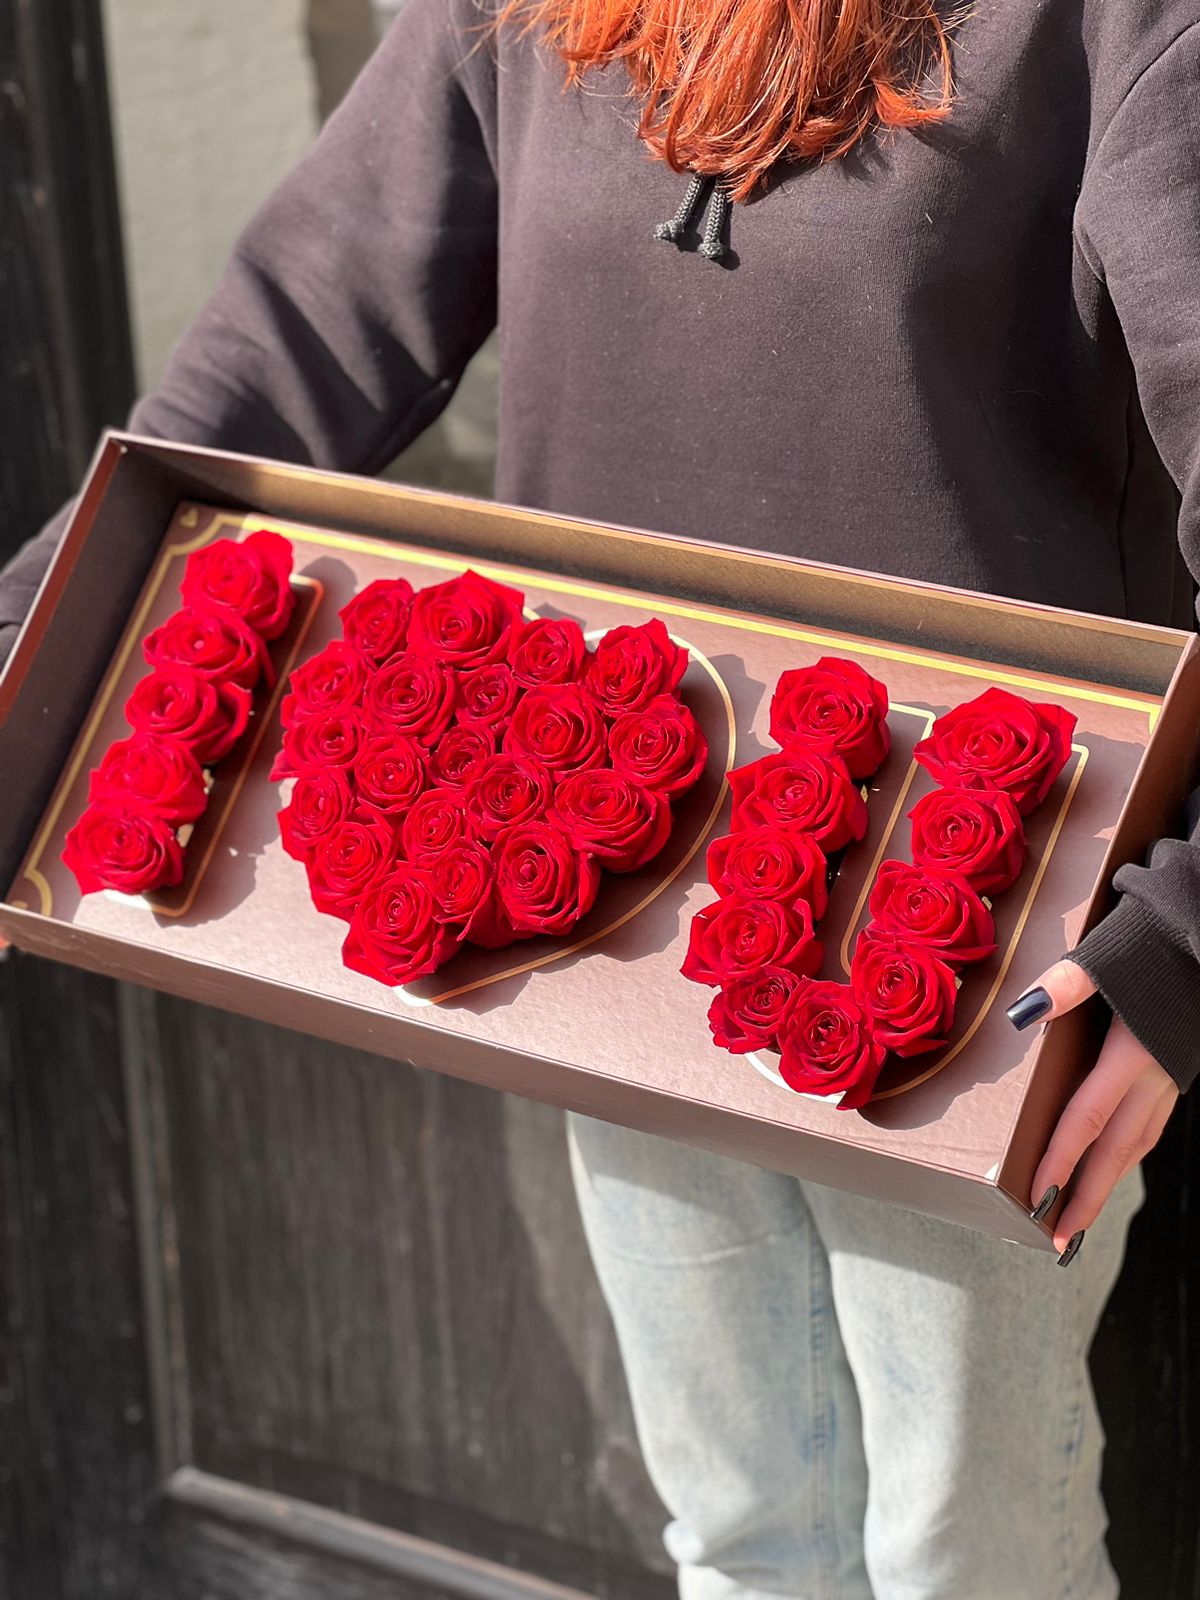 "I love you" roses